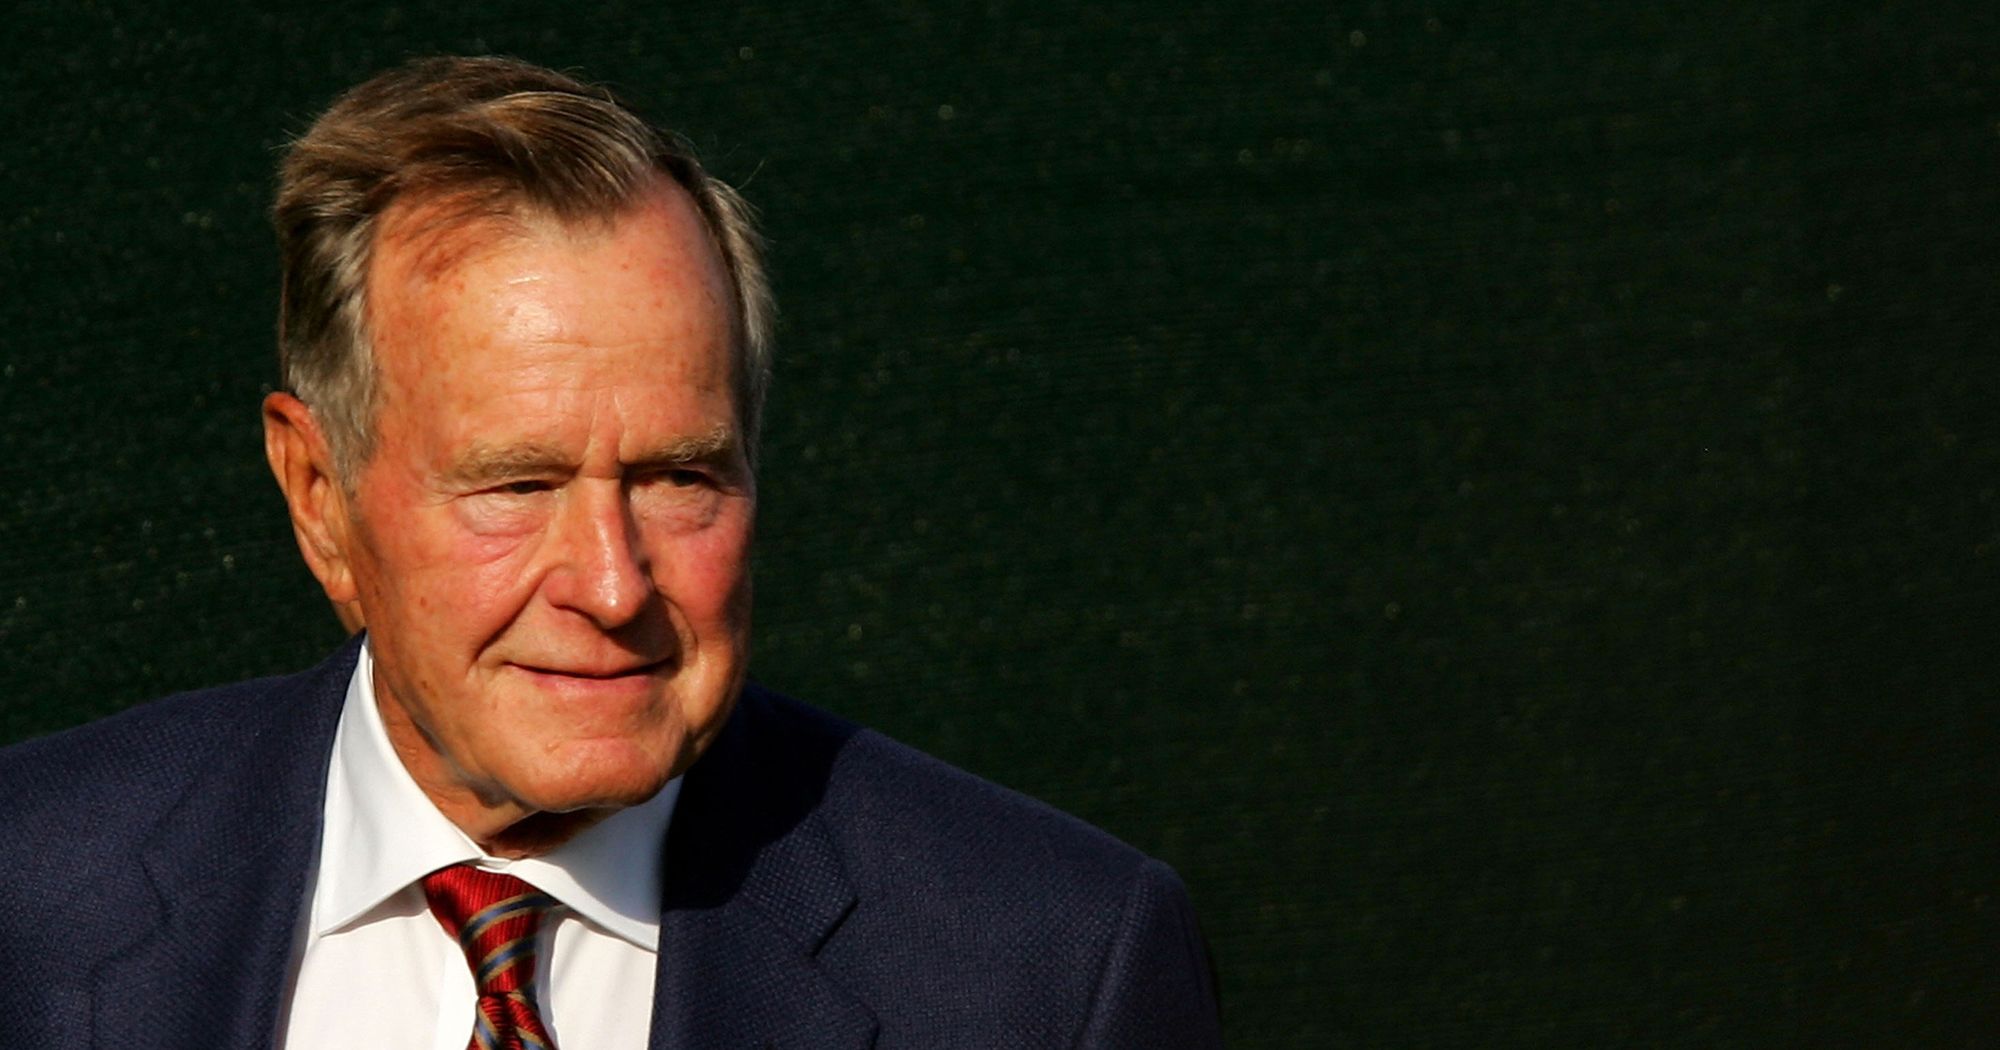 George H.W. Bush (No. 41) - IQ 143